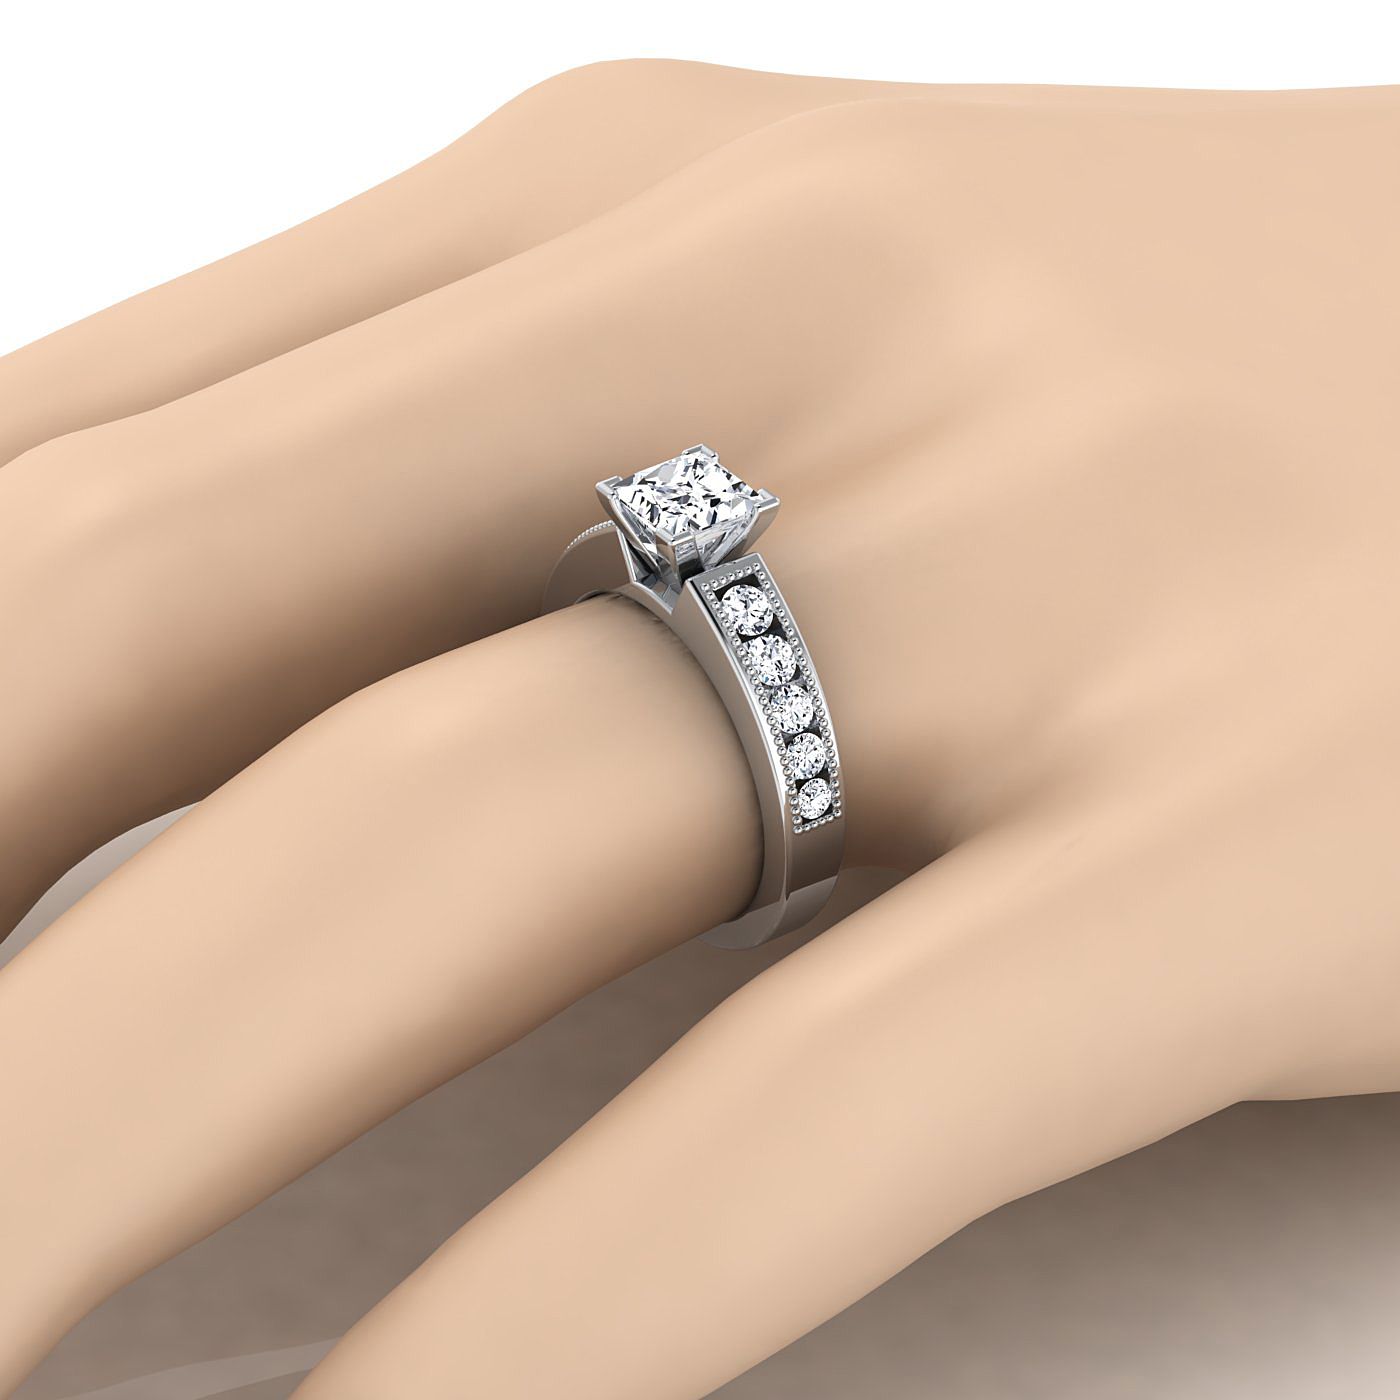 18K White Gold Princess Cut Diamond Antique Milgrain Bead and Channel Set Engagement Ring -1/2ctw